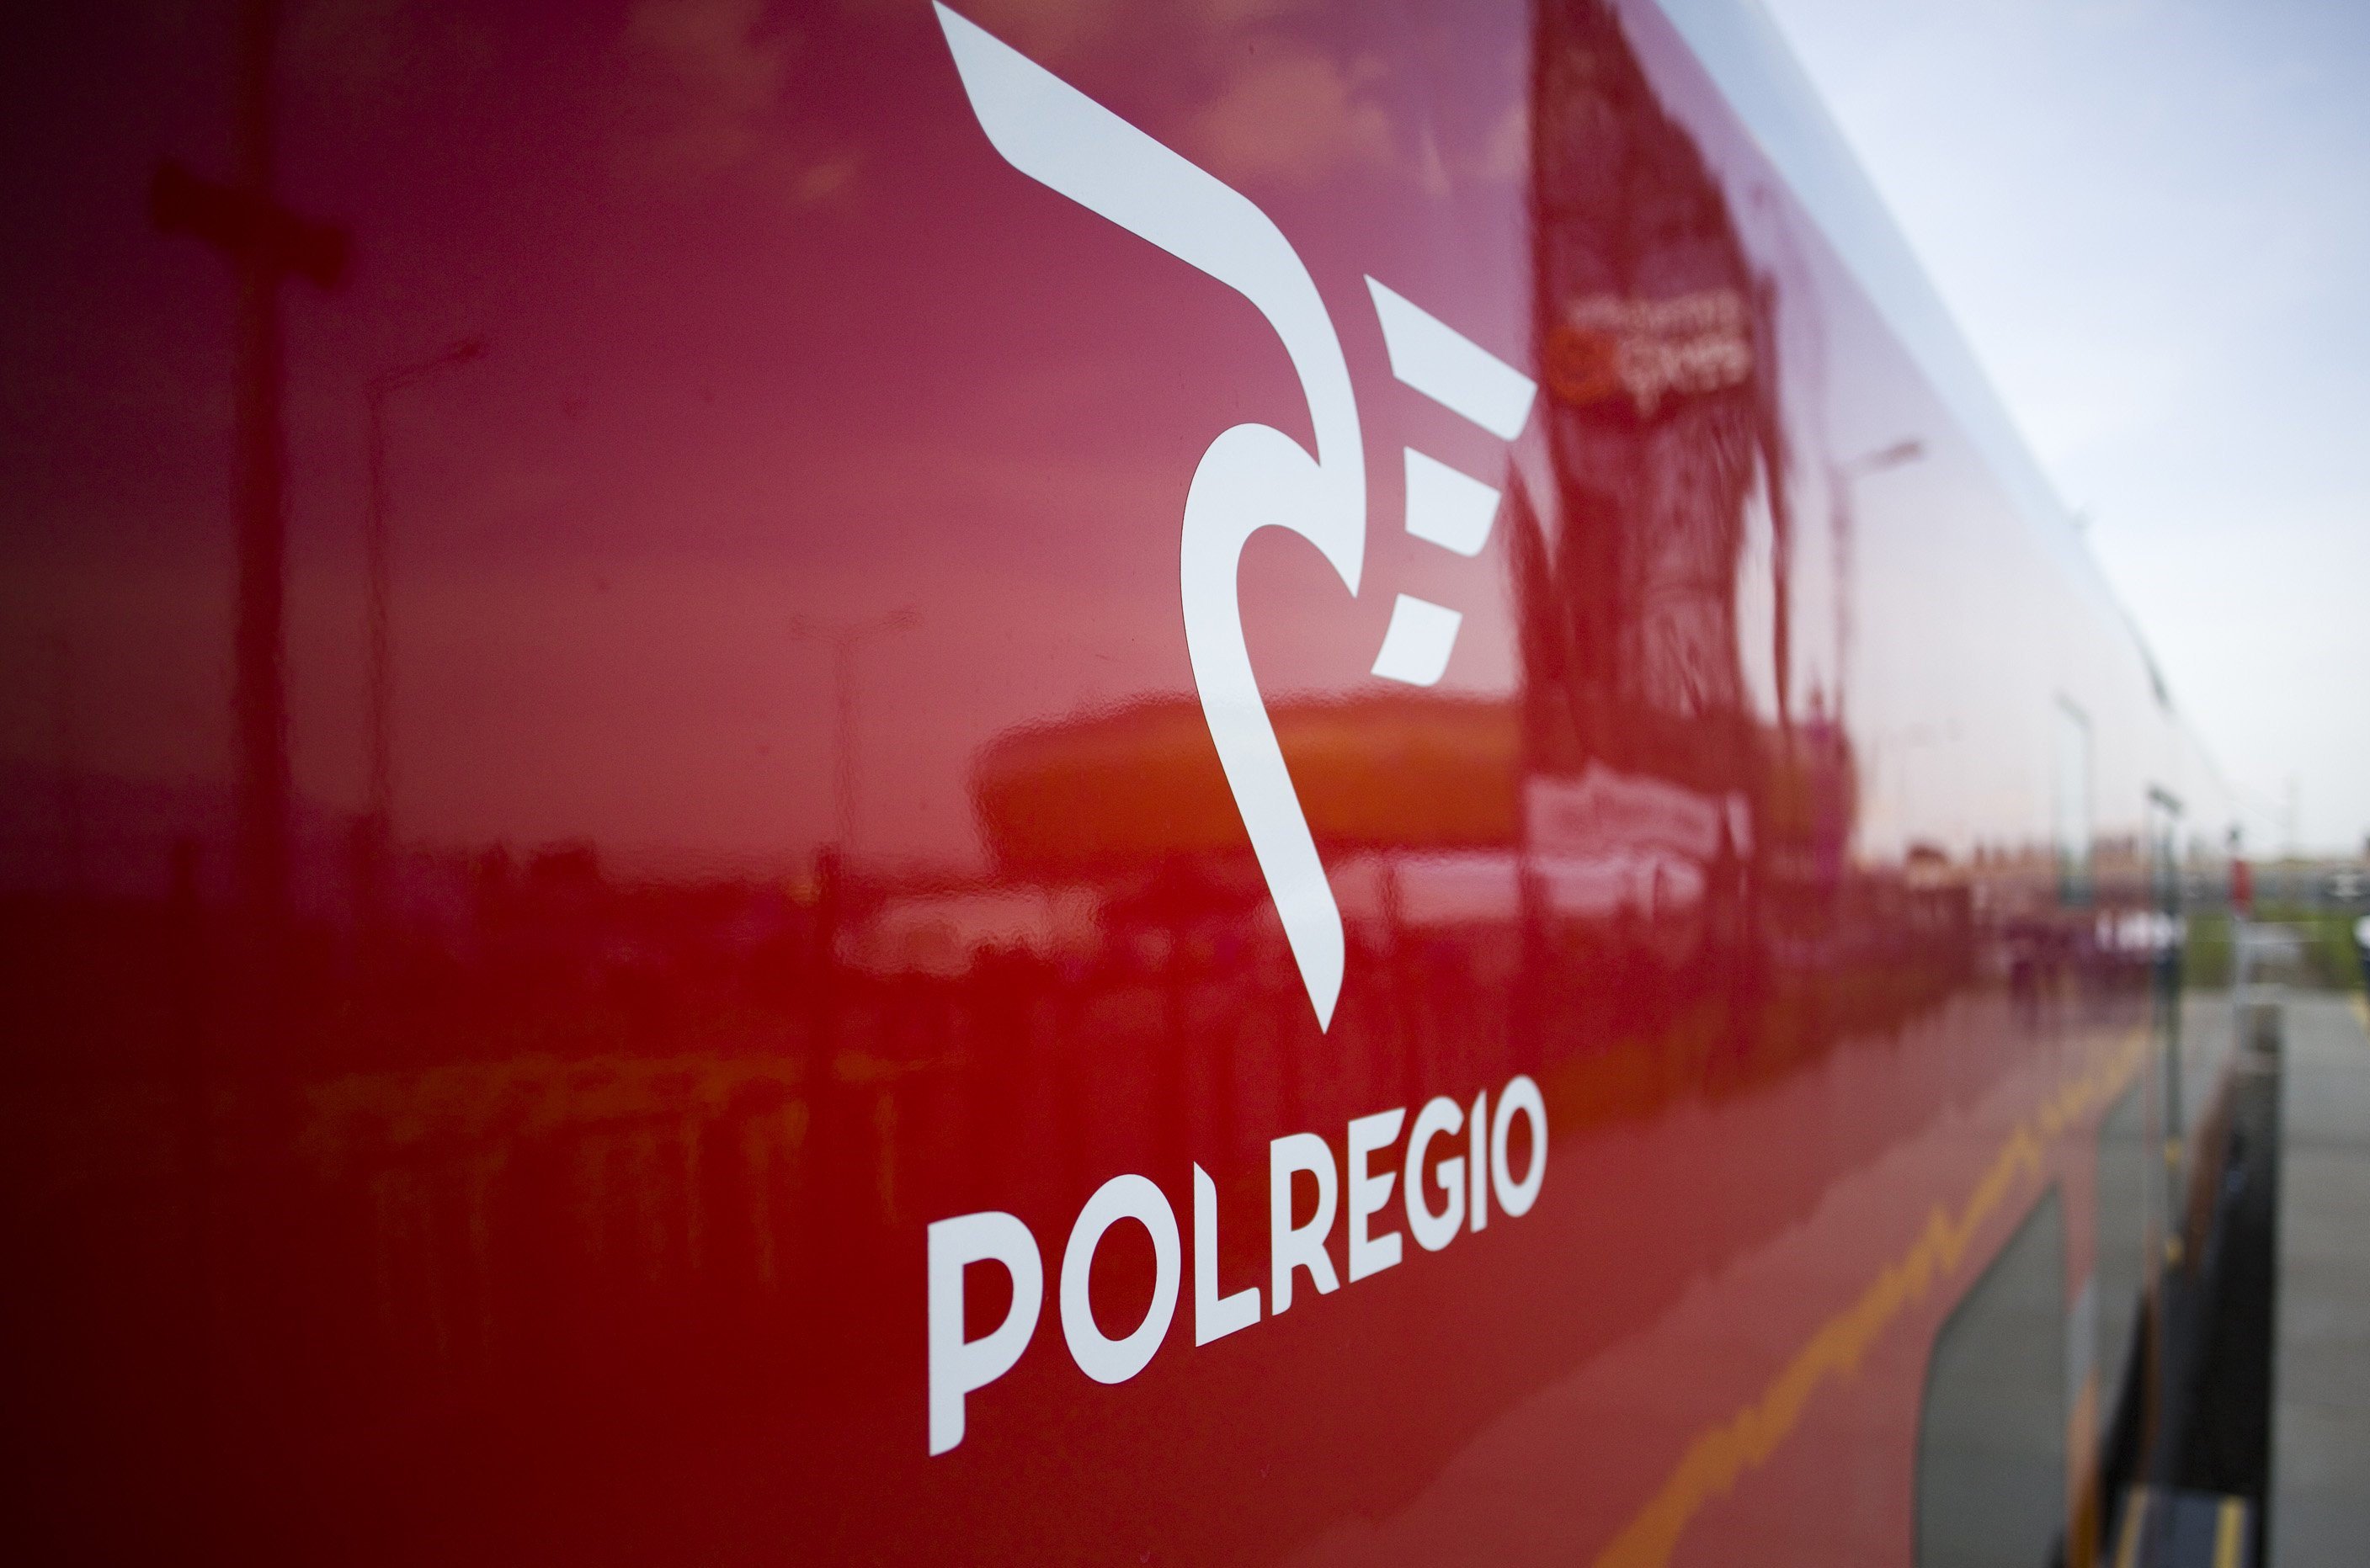 1 POLREGIO_logo.original